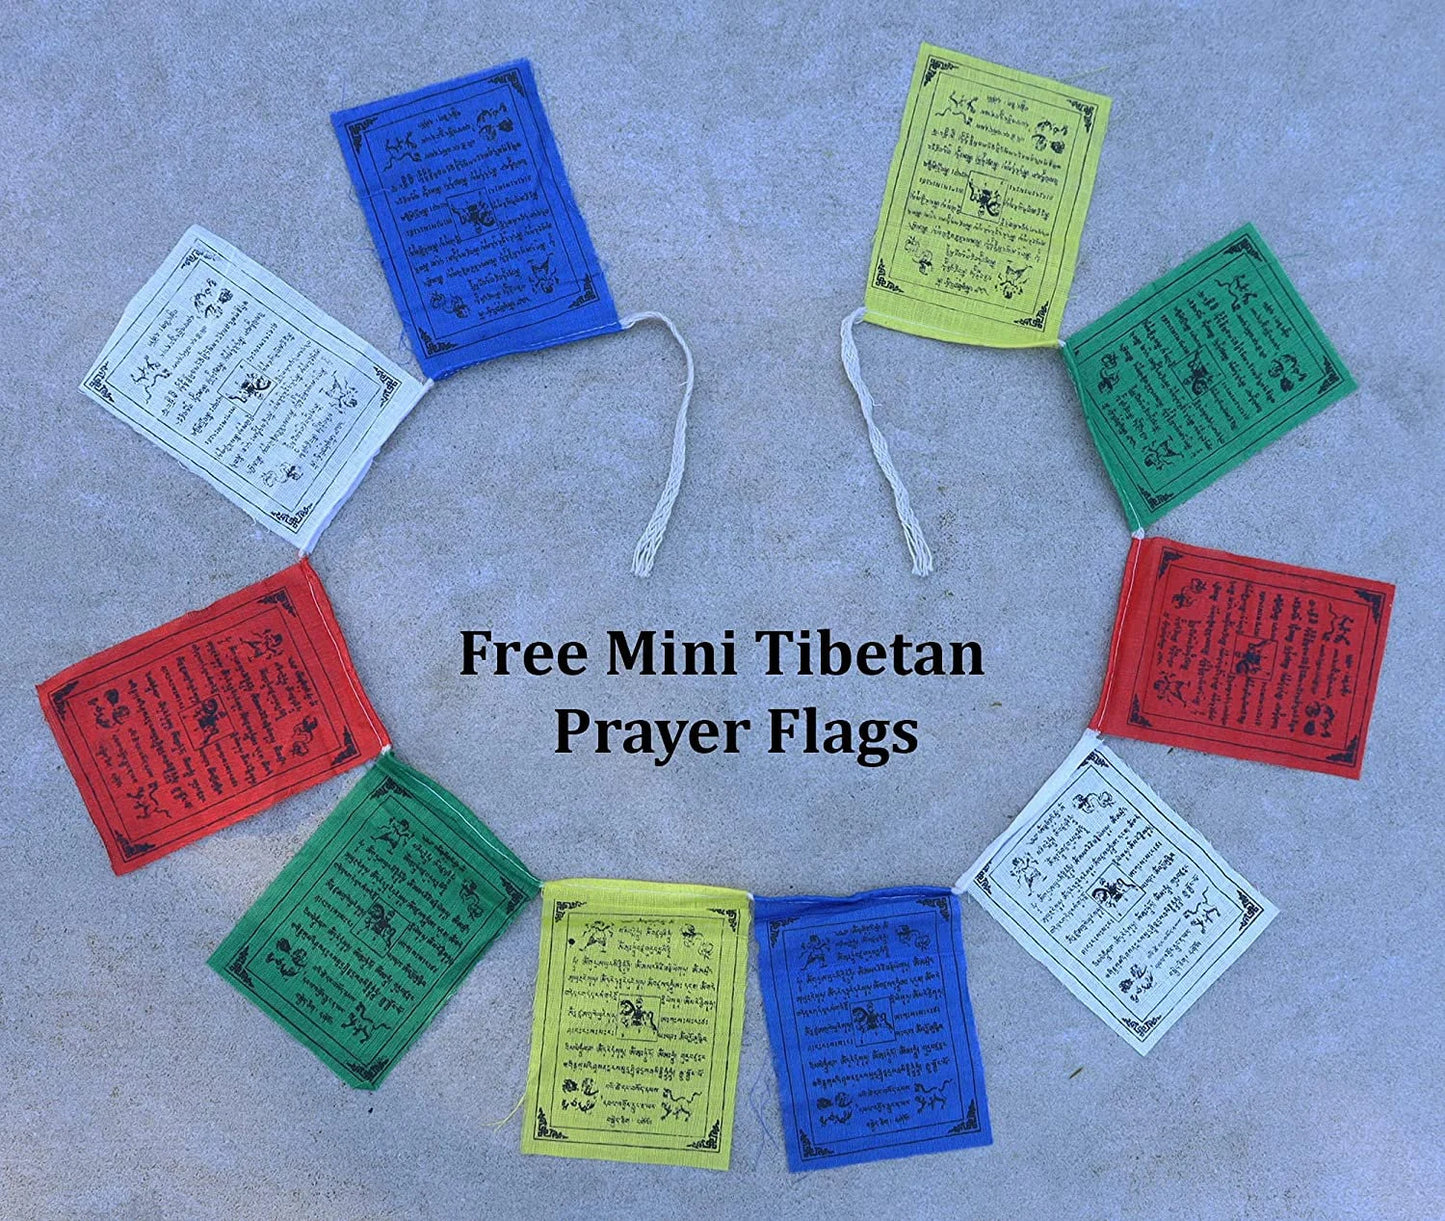 Tibetan Singing Bowl Complete Set Flower Of Life ~ For Meditation, Yoga, Spiritual Healing and Mindfulness ~ Extra Large